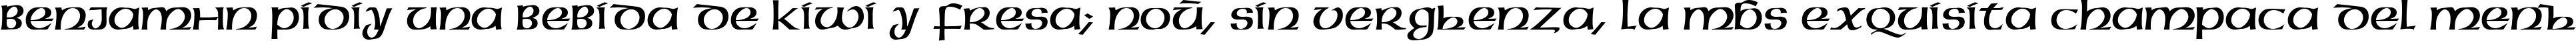 Пример написания шрифтом McLeudCTT текста на испанском